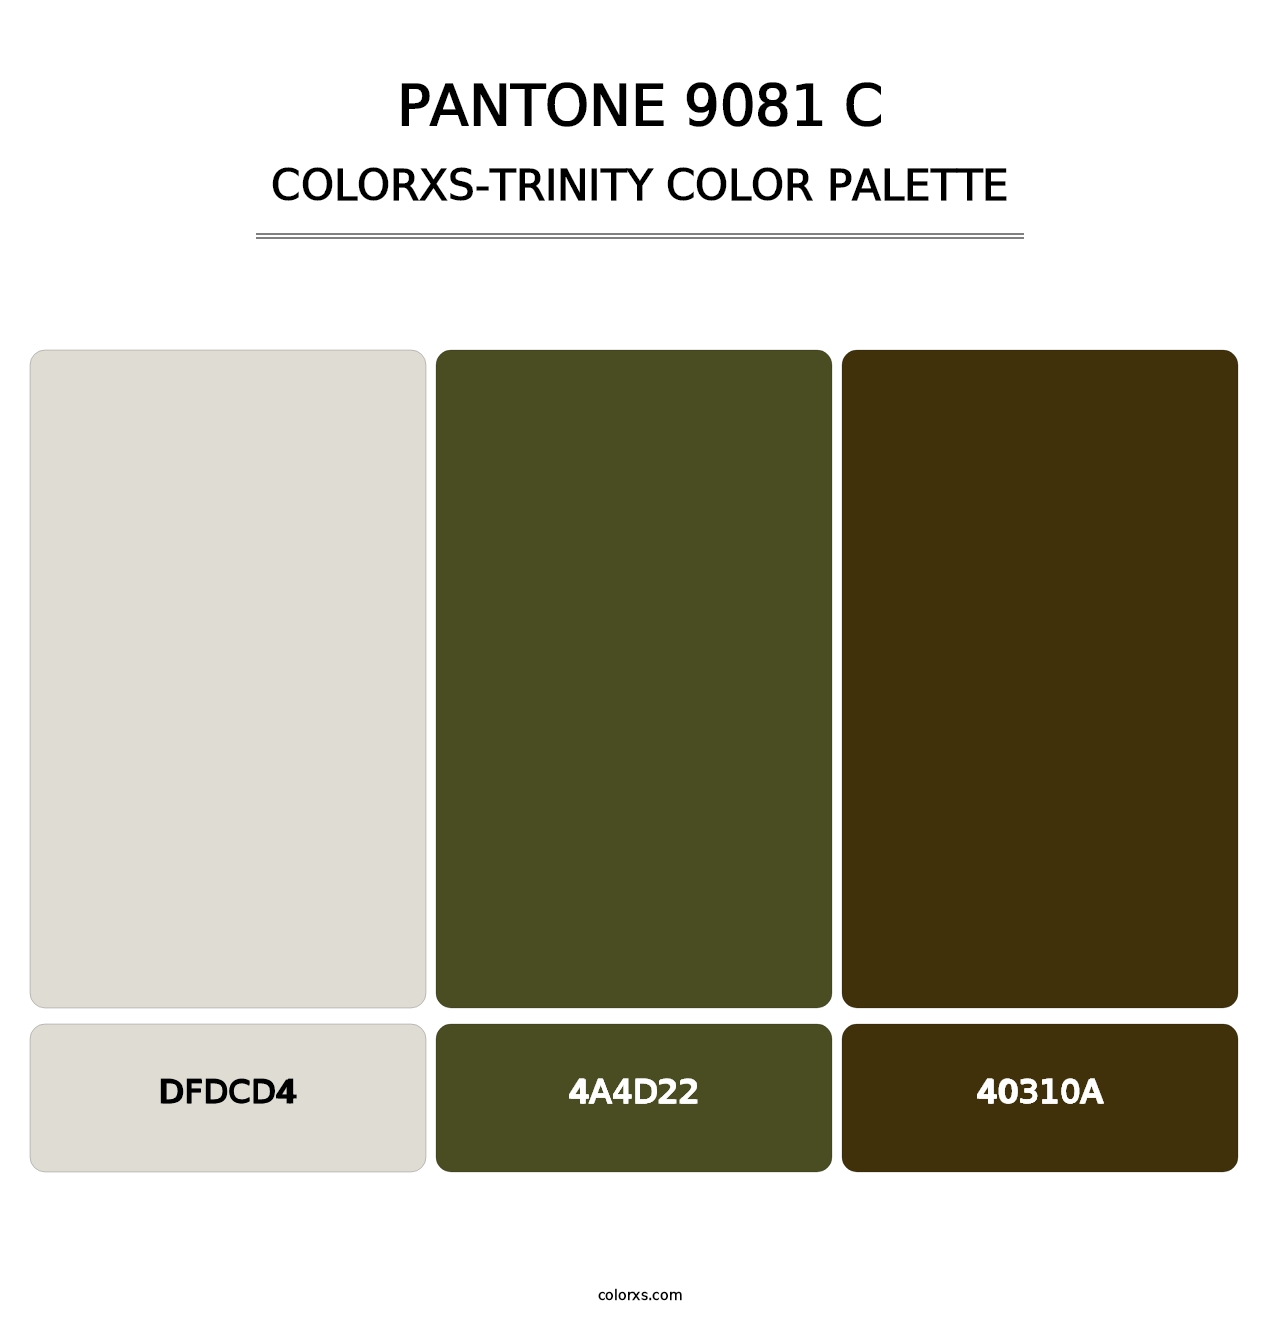 PANTONE 9081 C - Colorxs Trinity Palette